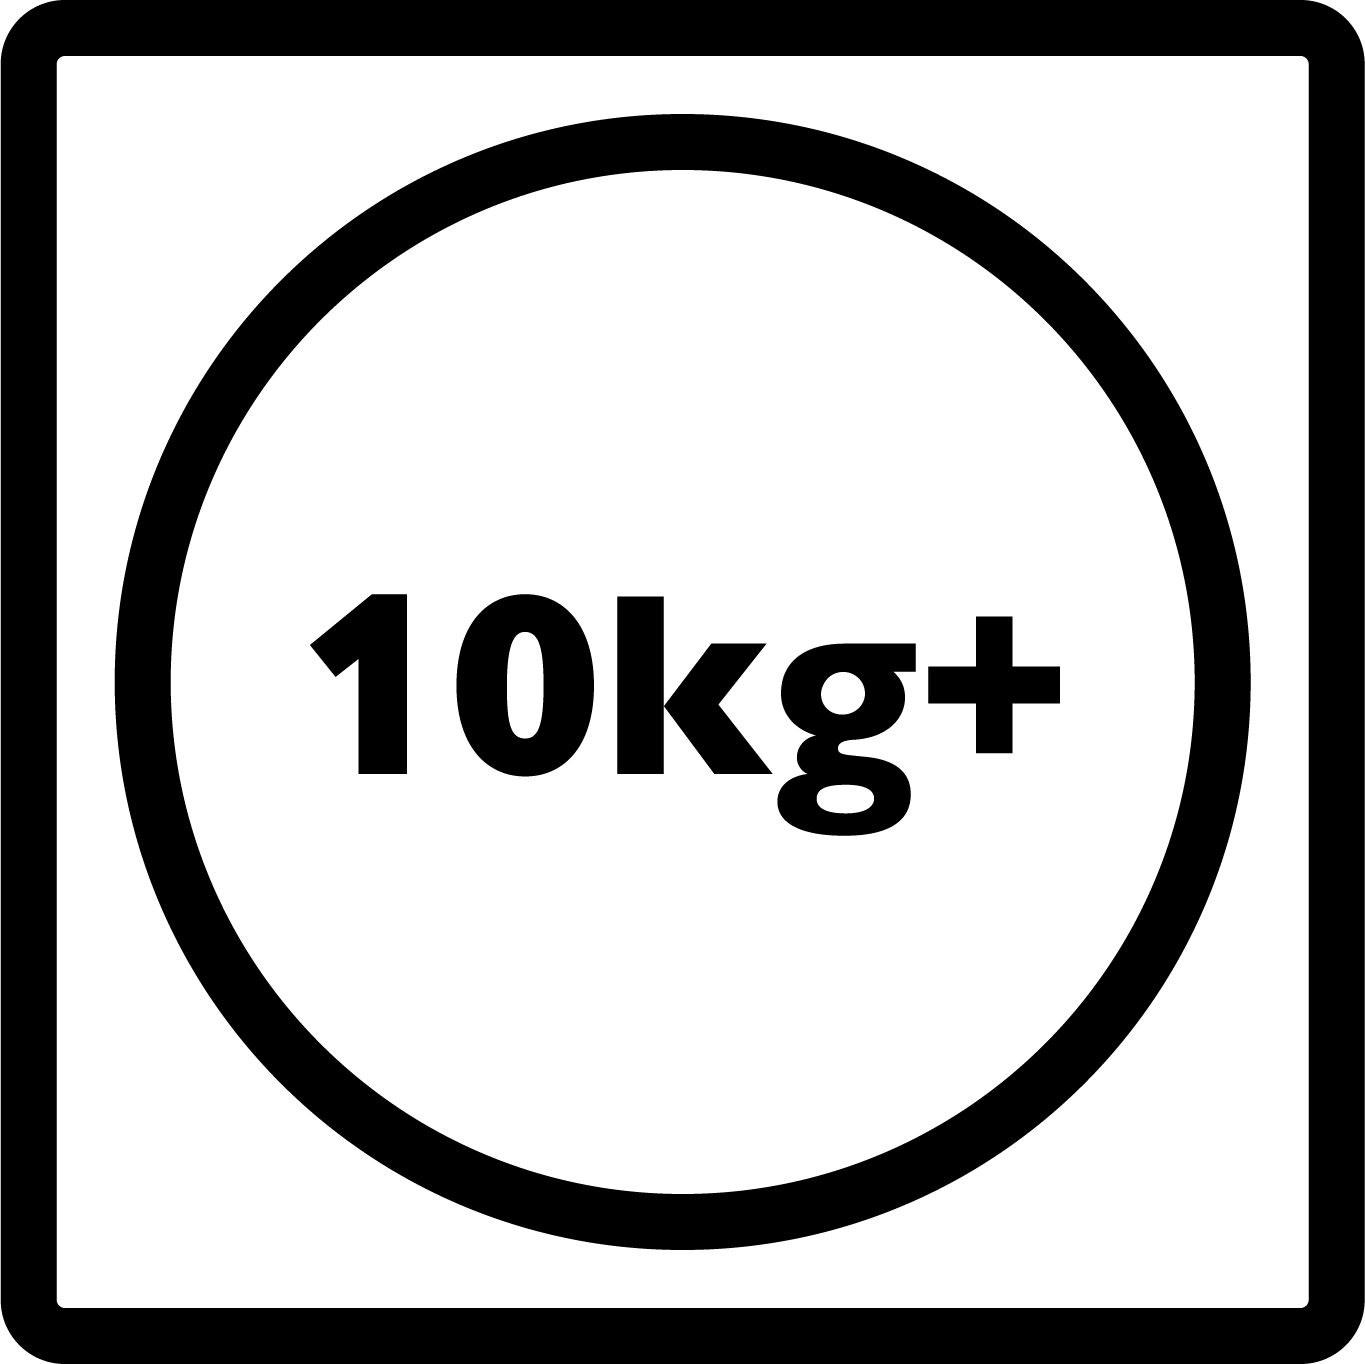 10kg+